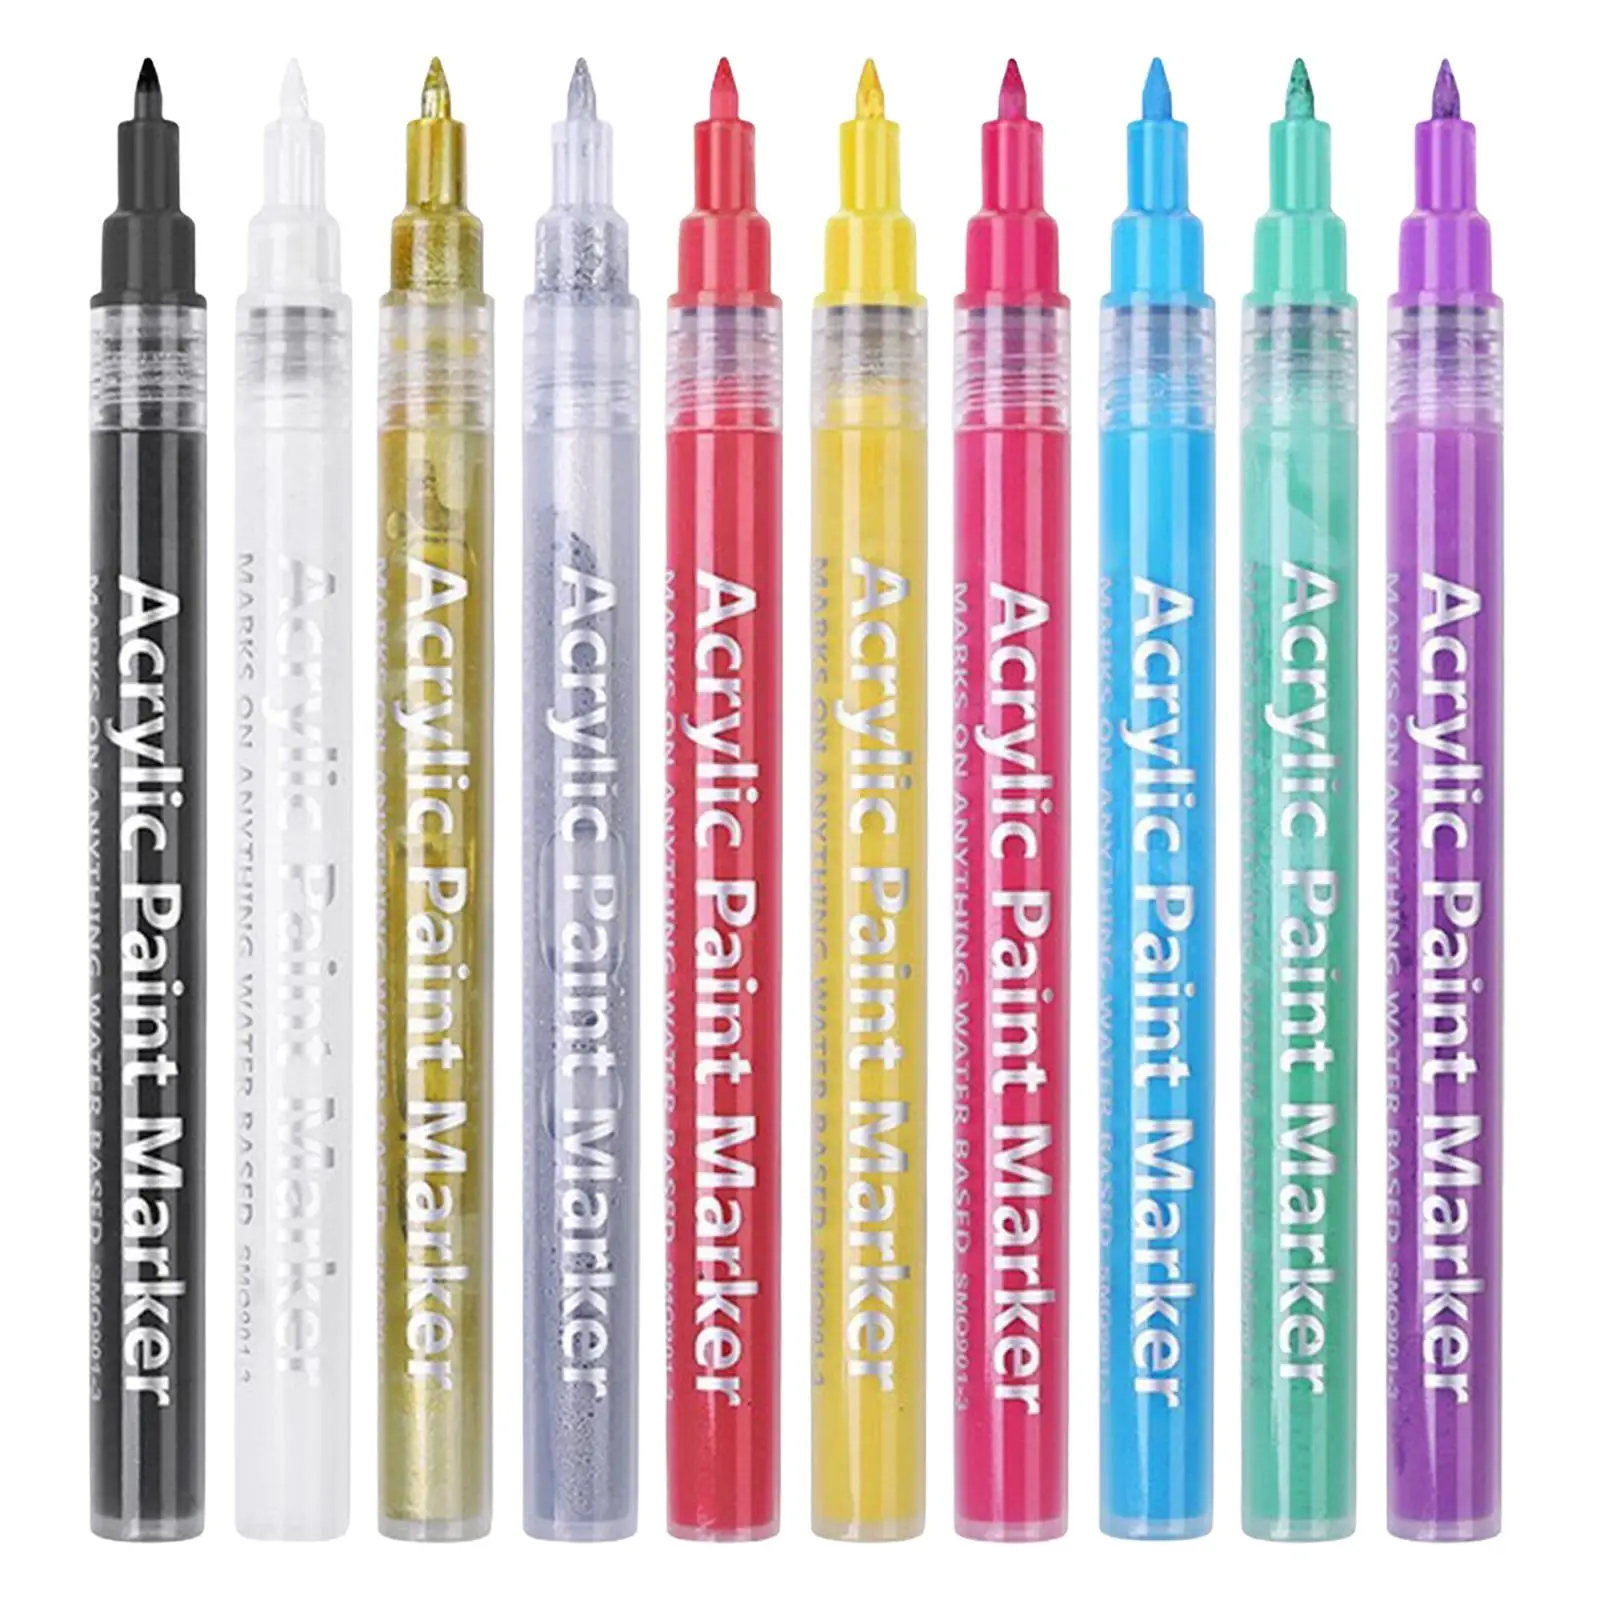 10Pcs Nail Art Drawing Pen DIY Fingernail Different Colors Manicure Tools for Nail Art